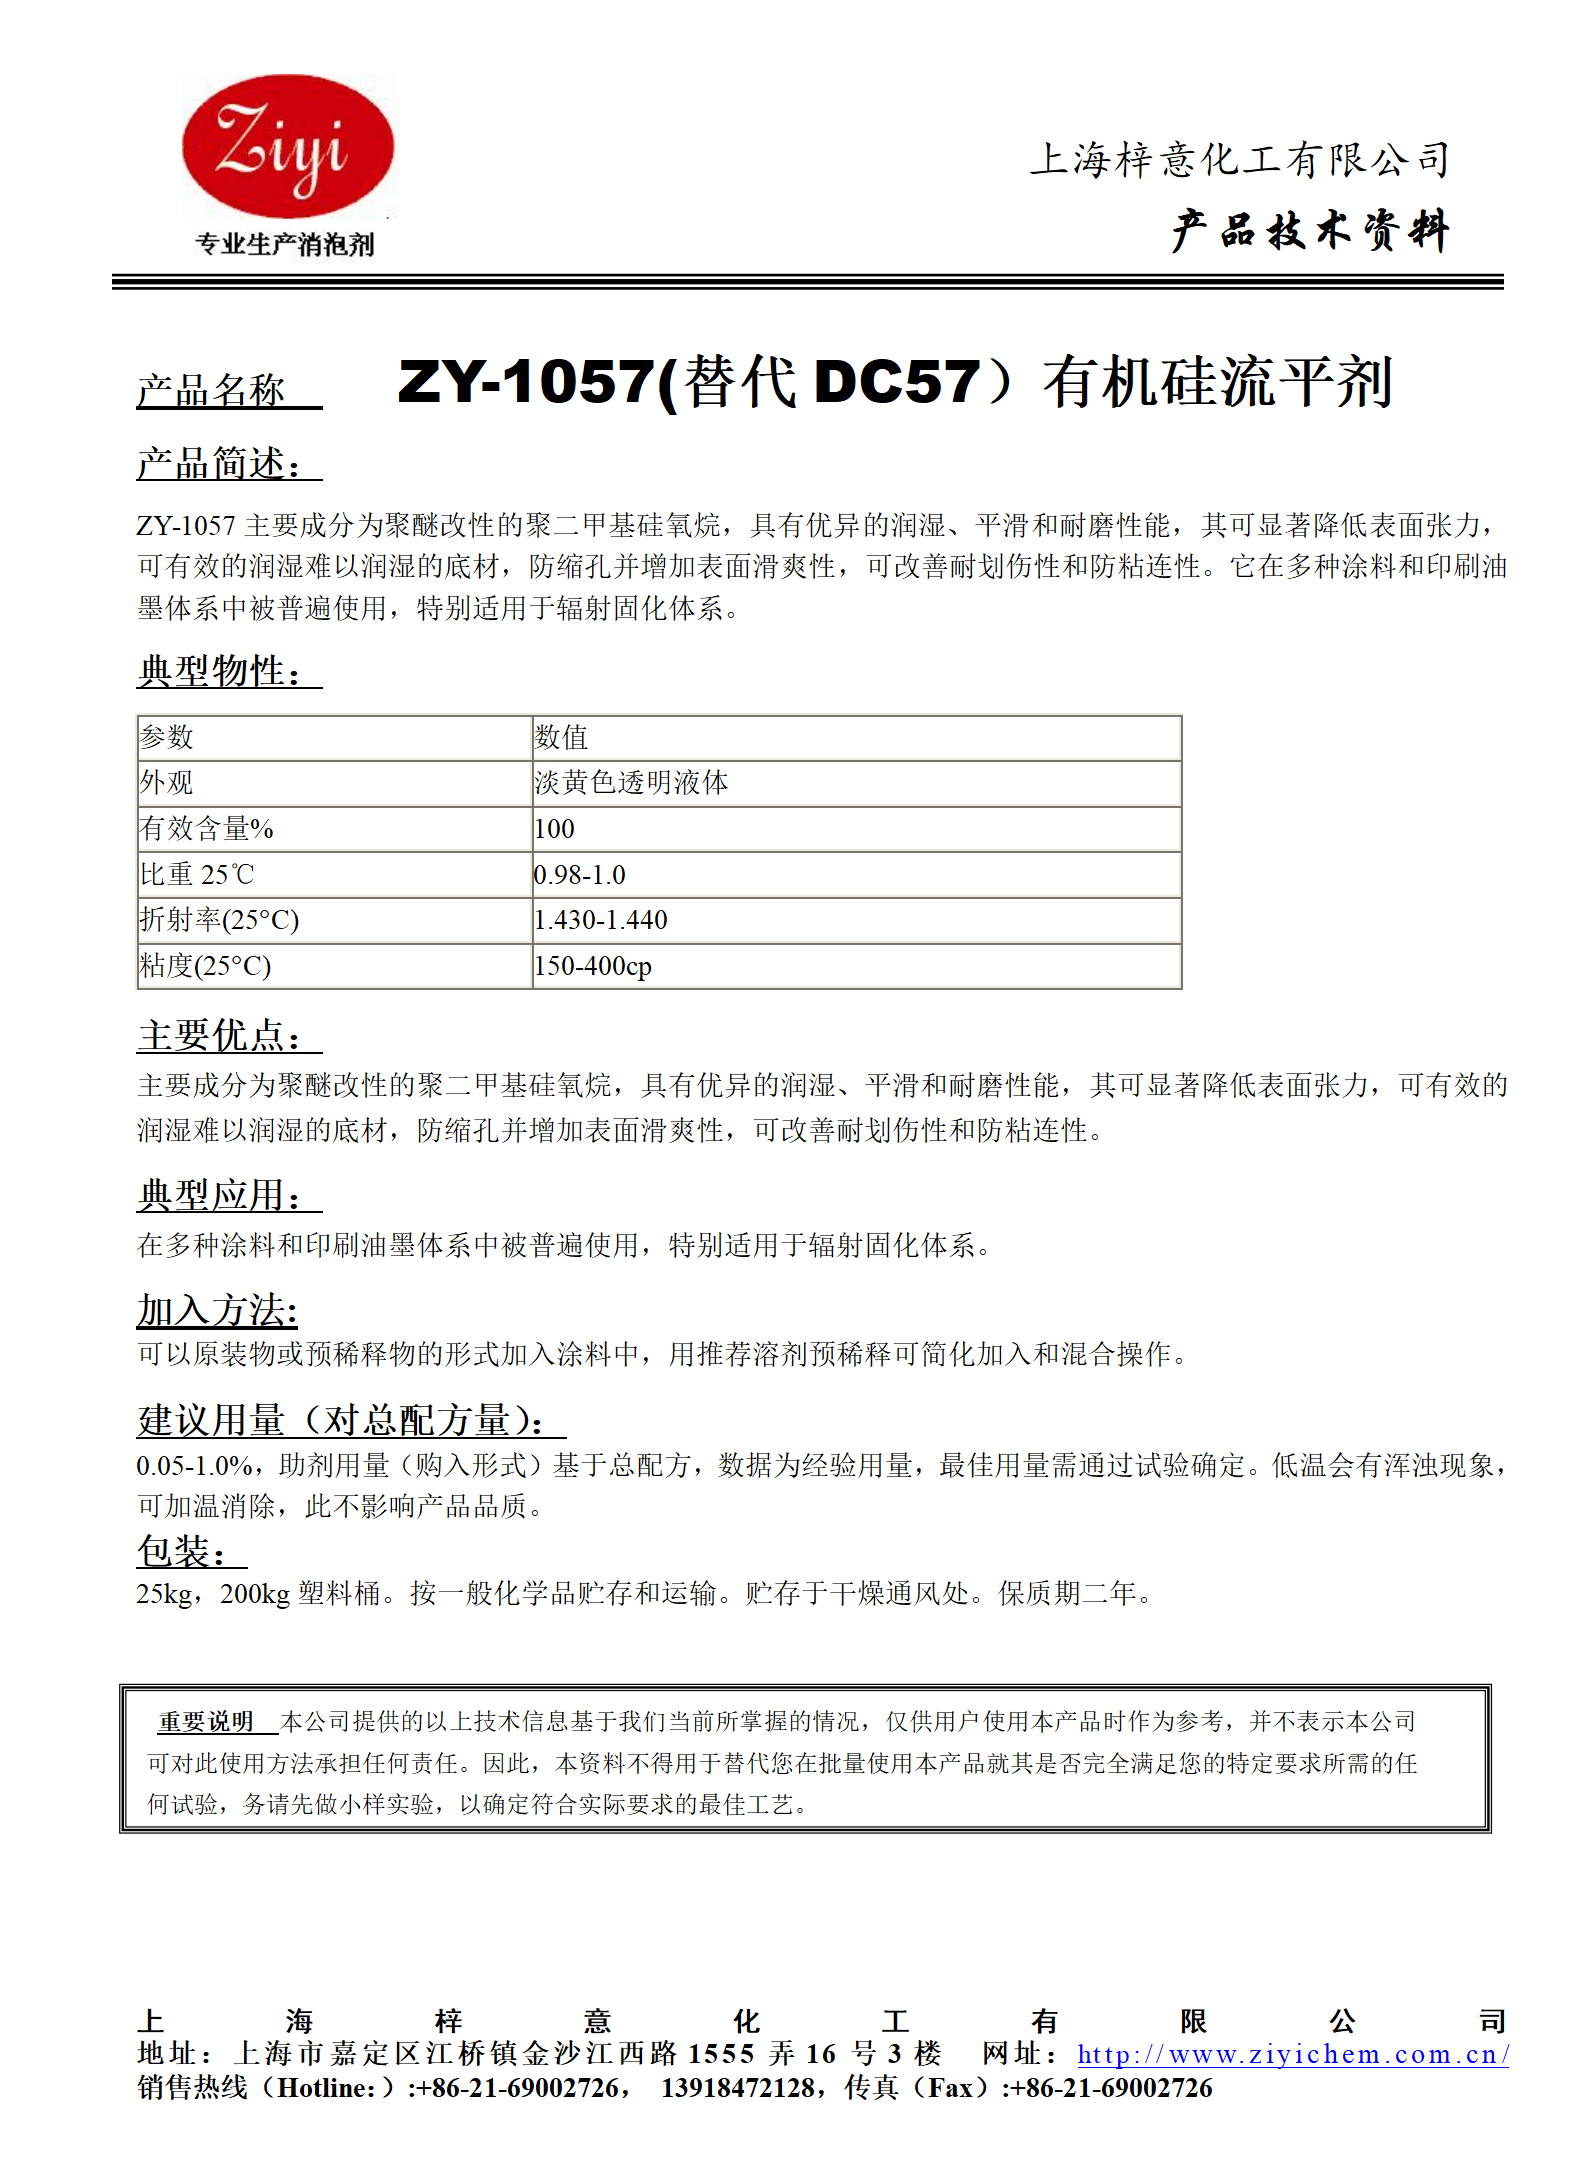 ZY-1057 (替代DC57）有机硅流平剂_01.png